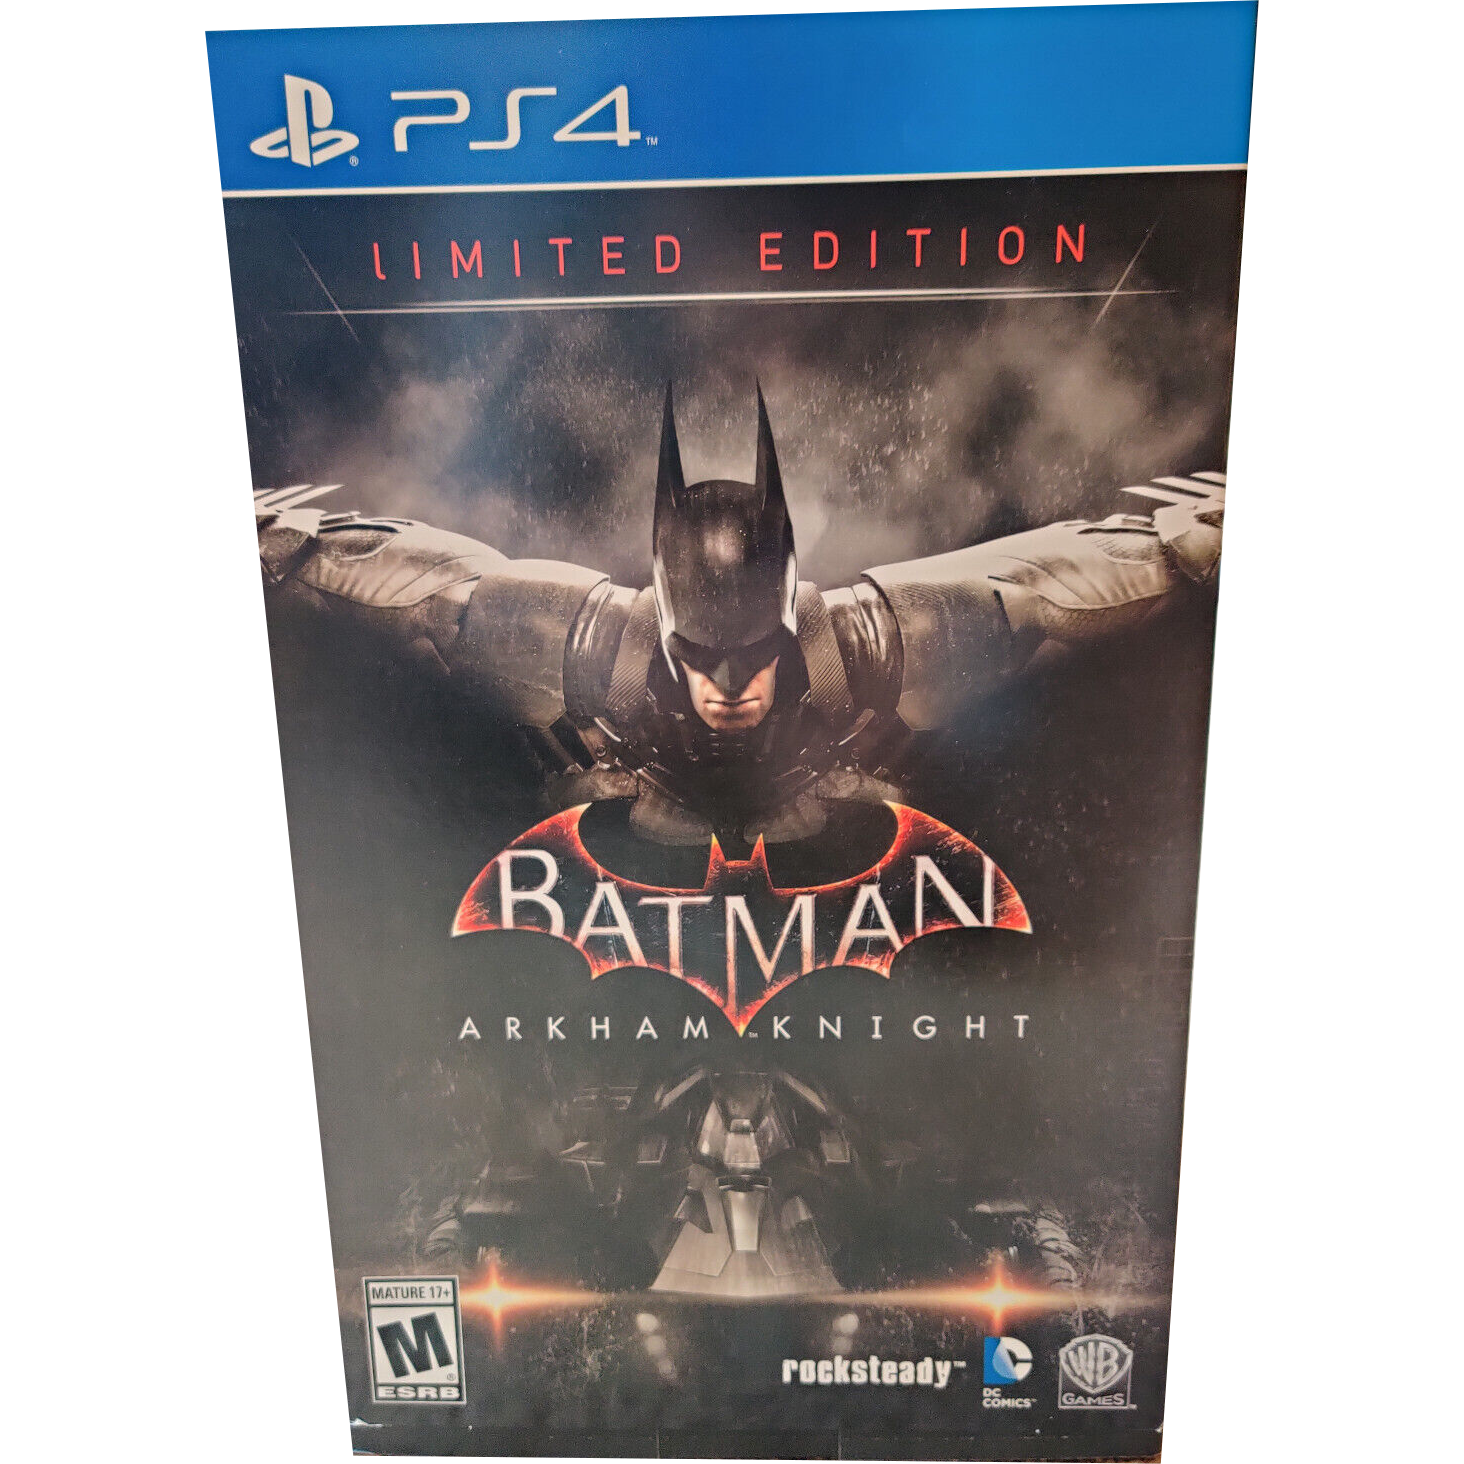 PS4 - Batman Arkham Knight Limited Edition